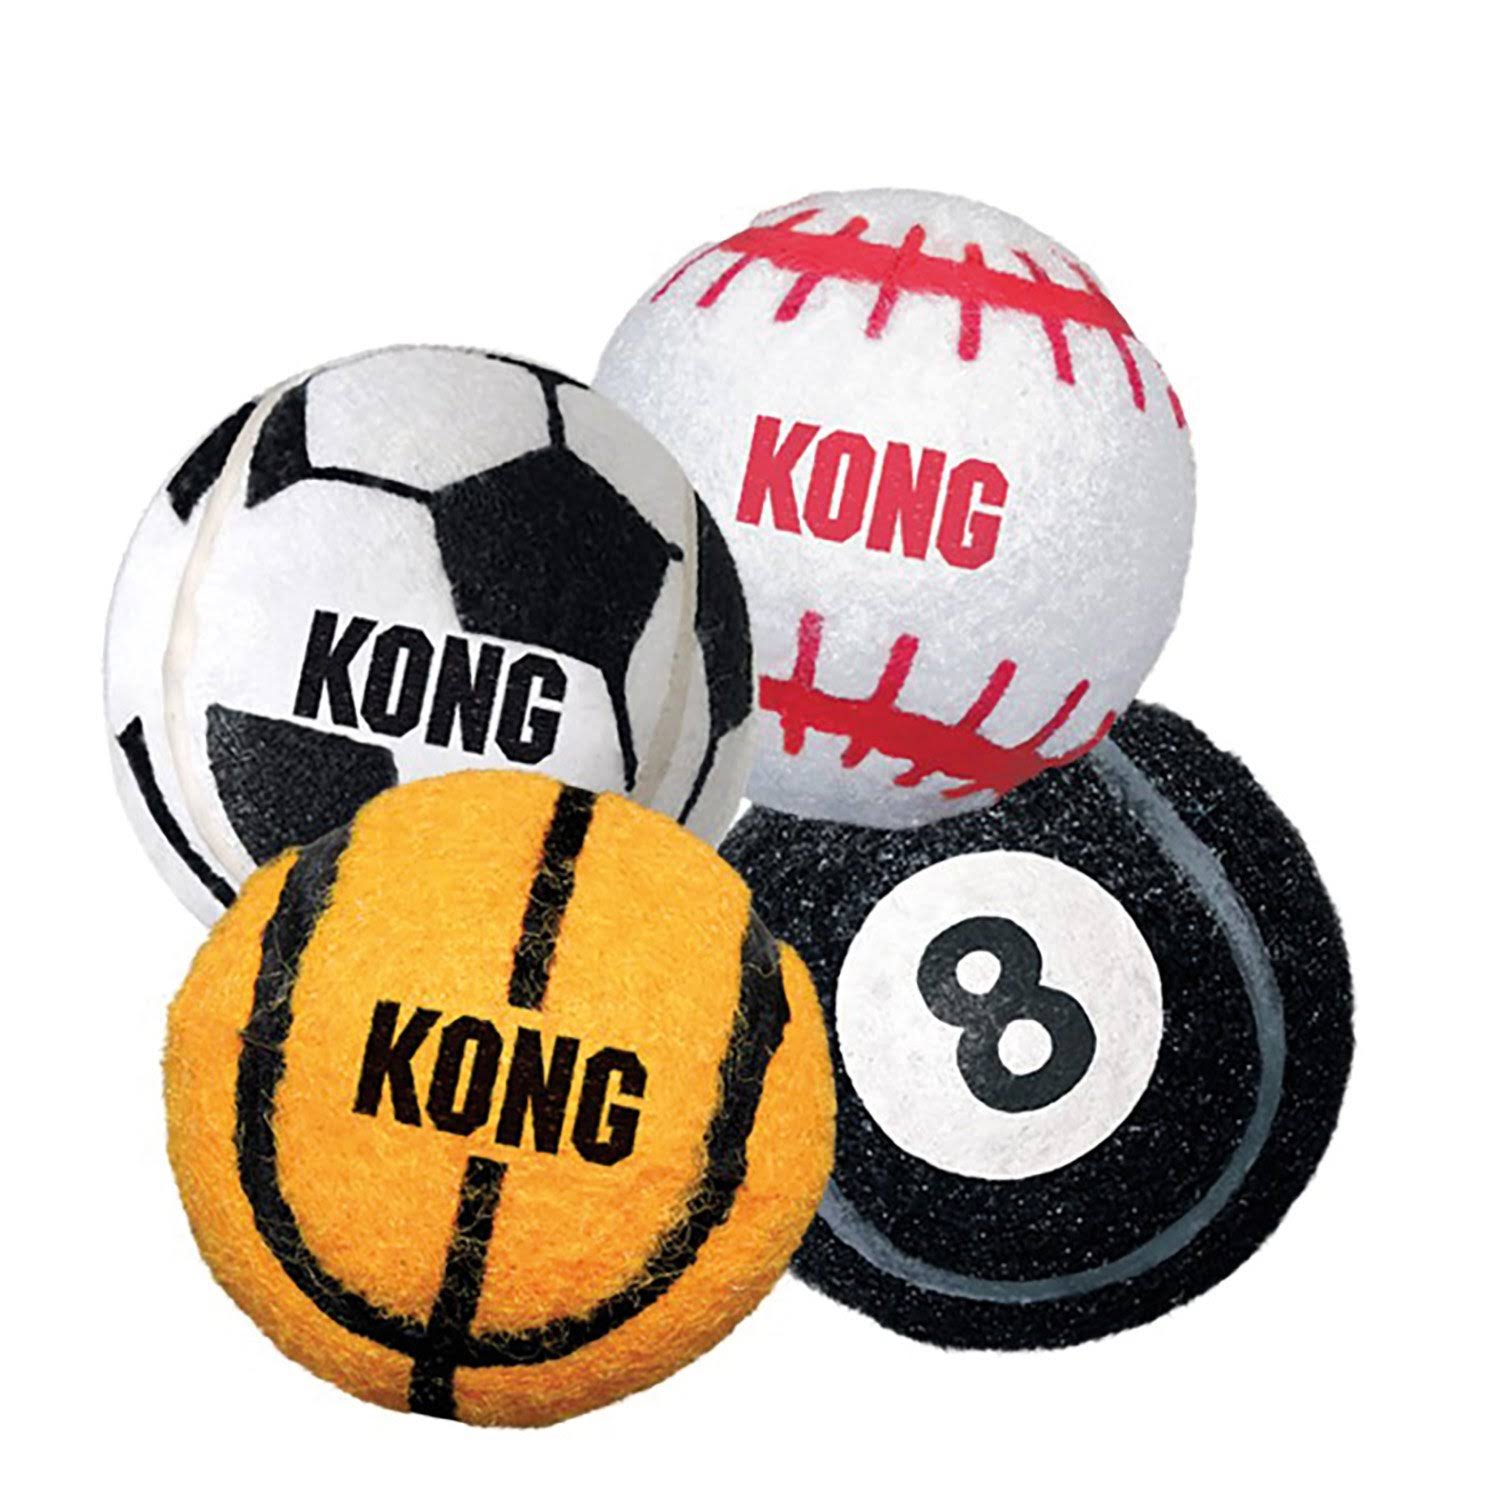 Kong Sport Balls Assorted Small Dog Toys